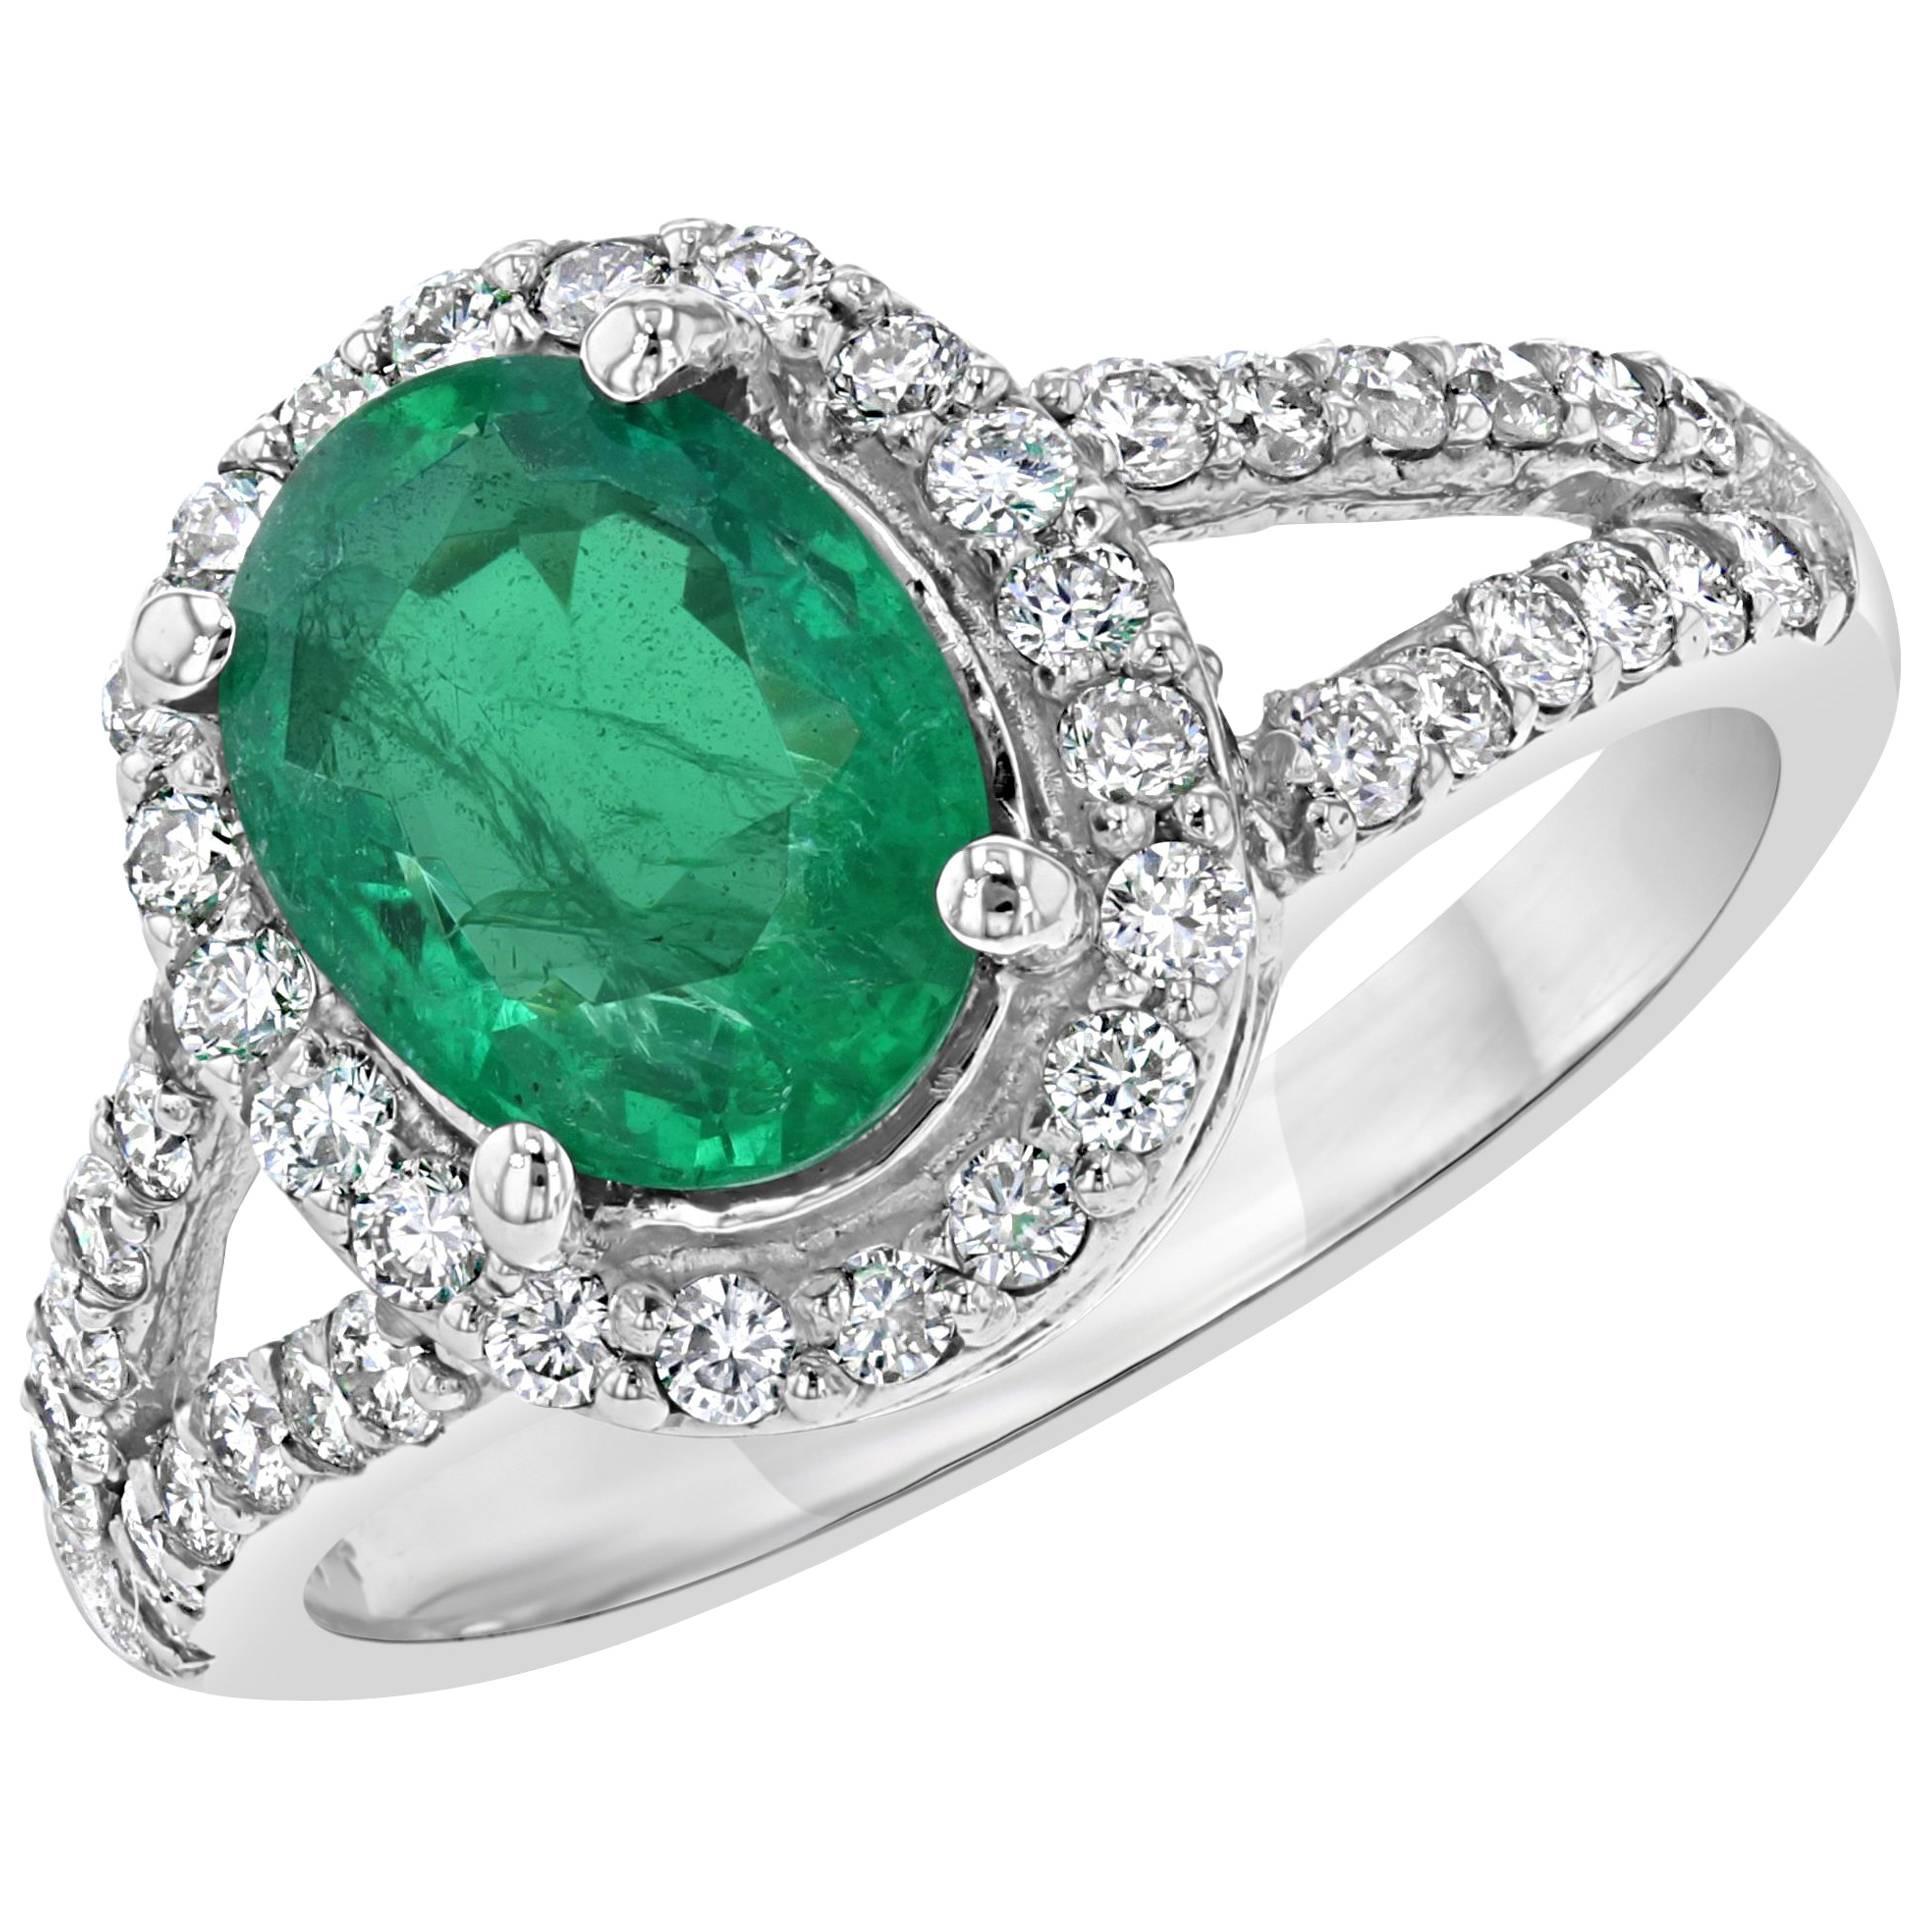 2.55 Carat Emerald Diamond Halo Ring